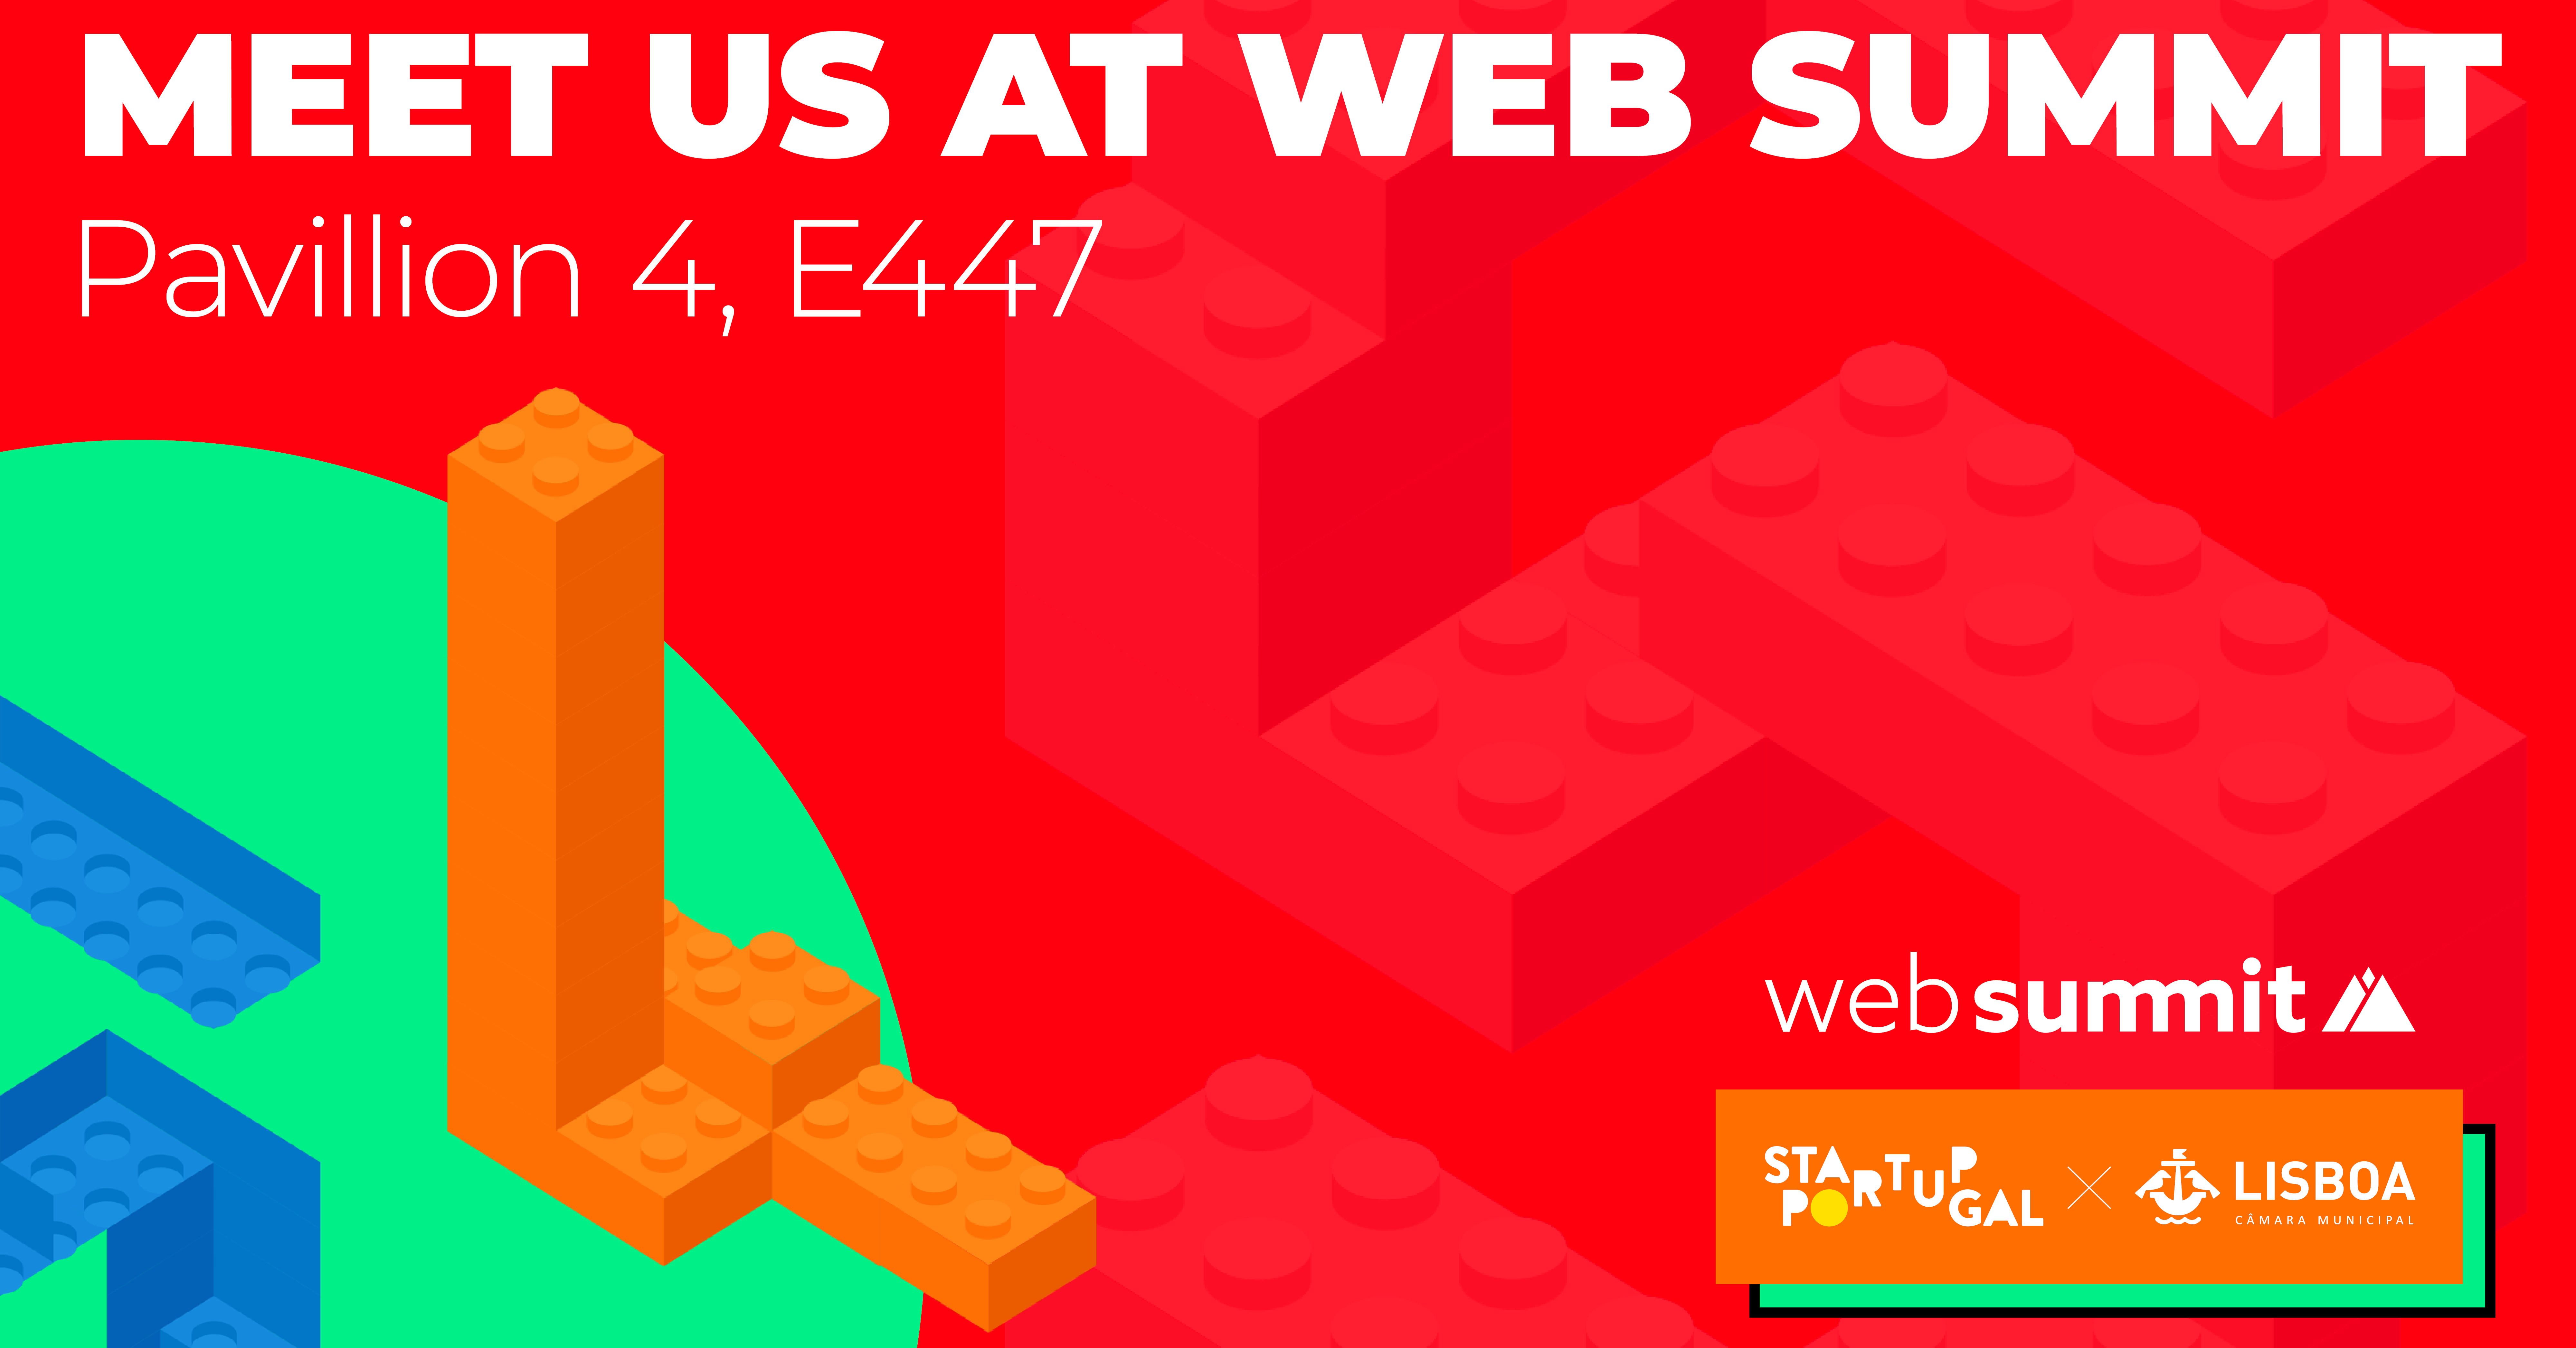 Meet us at Web Summit!